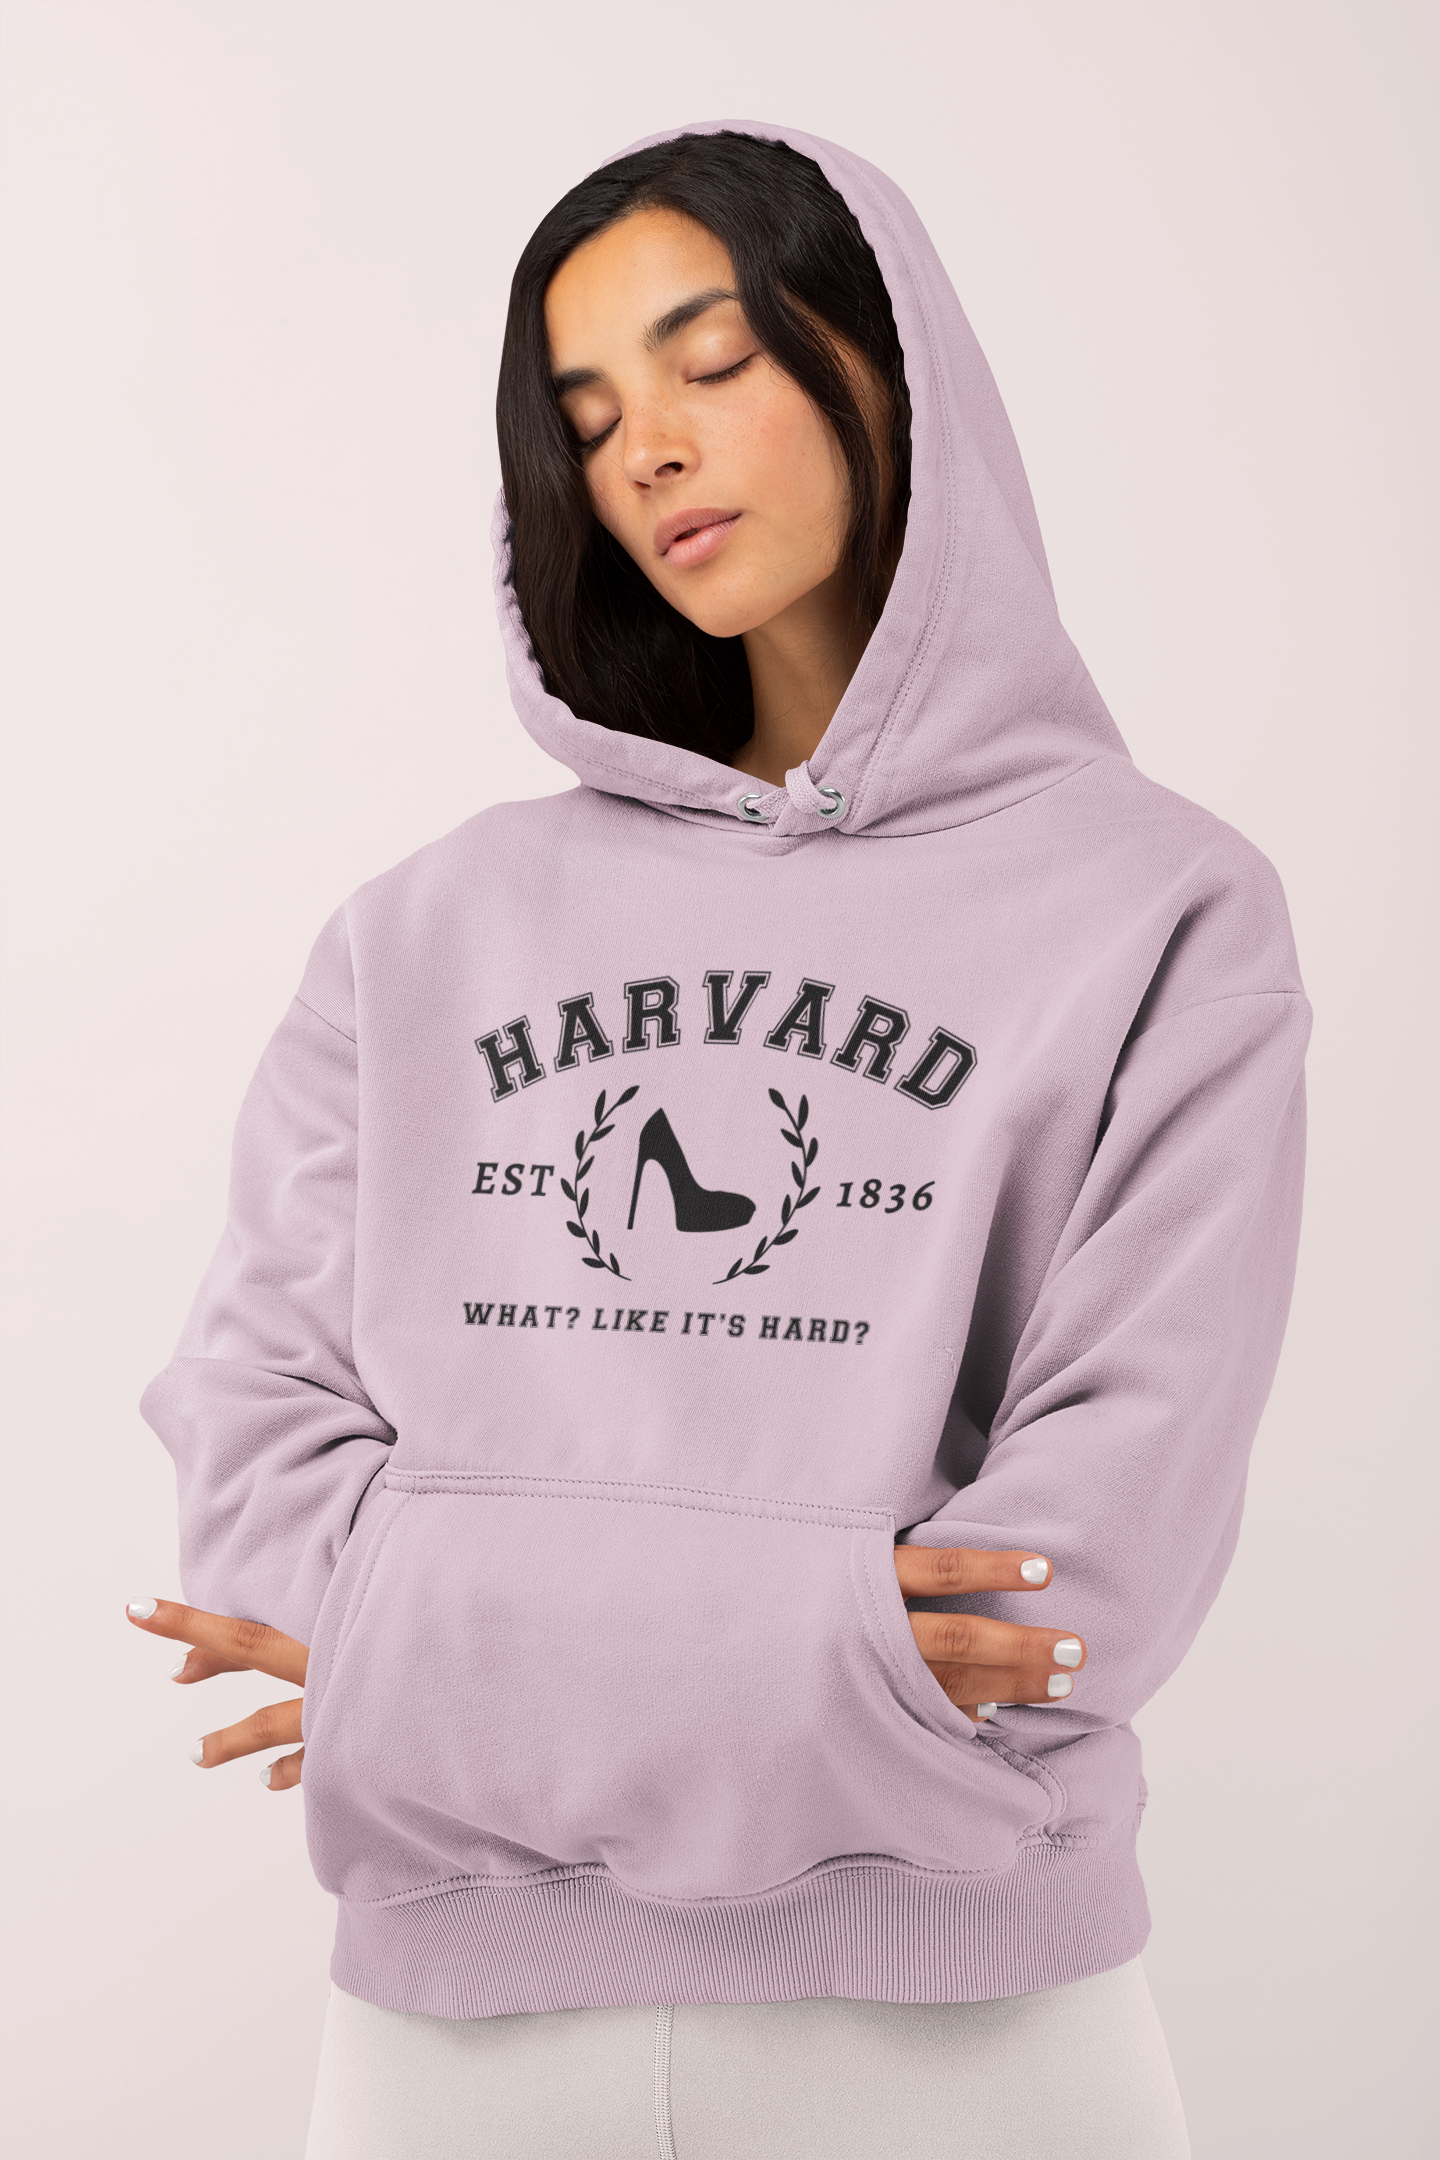 Legally Harvard Hooded Sweatshirt